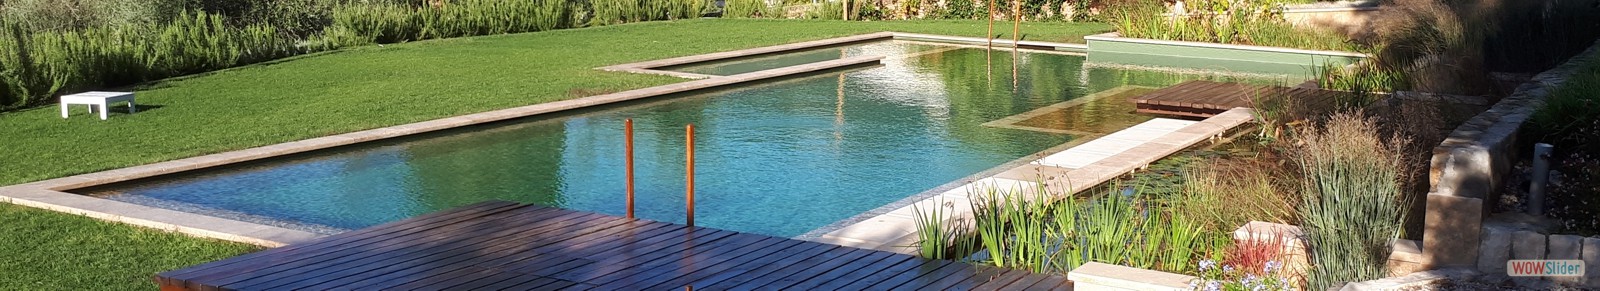 piscina naturale